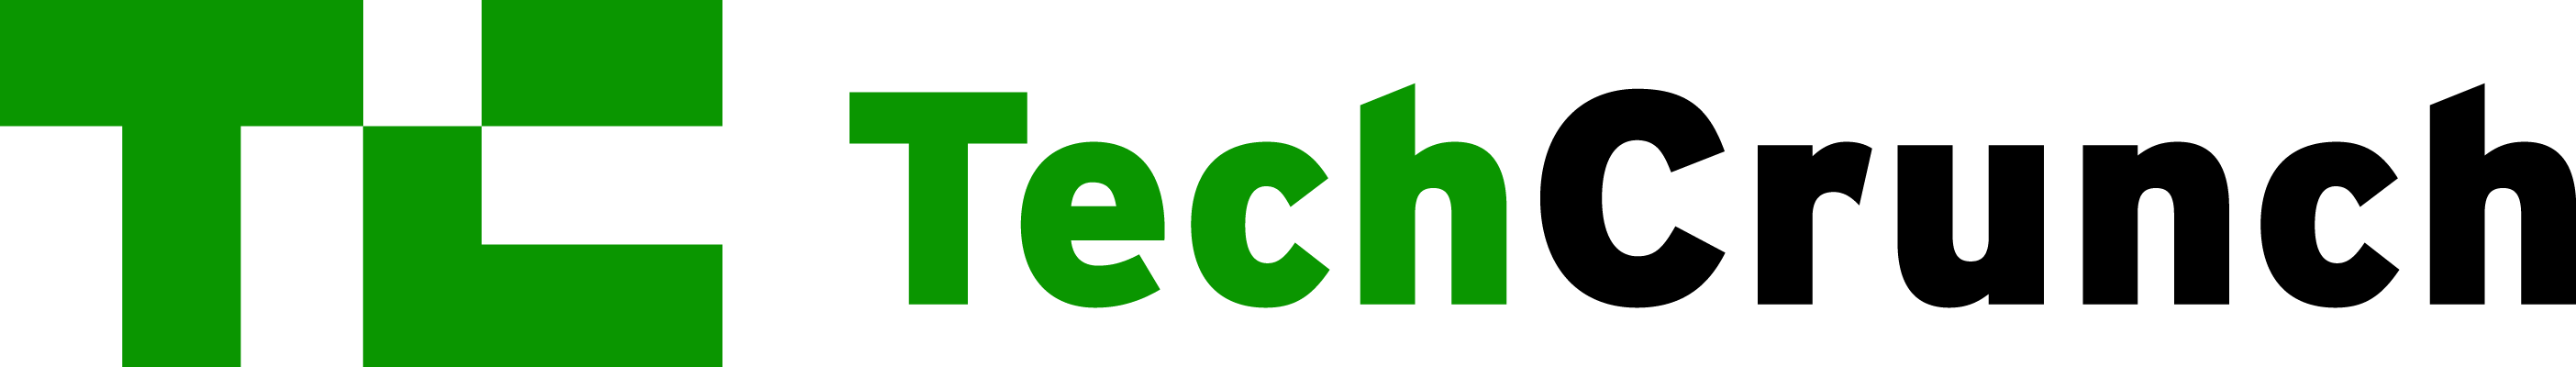 Image result for techcrunch logo